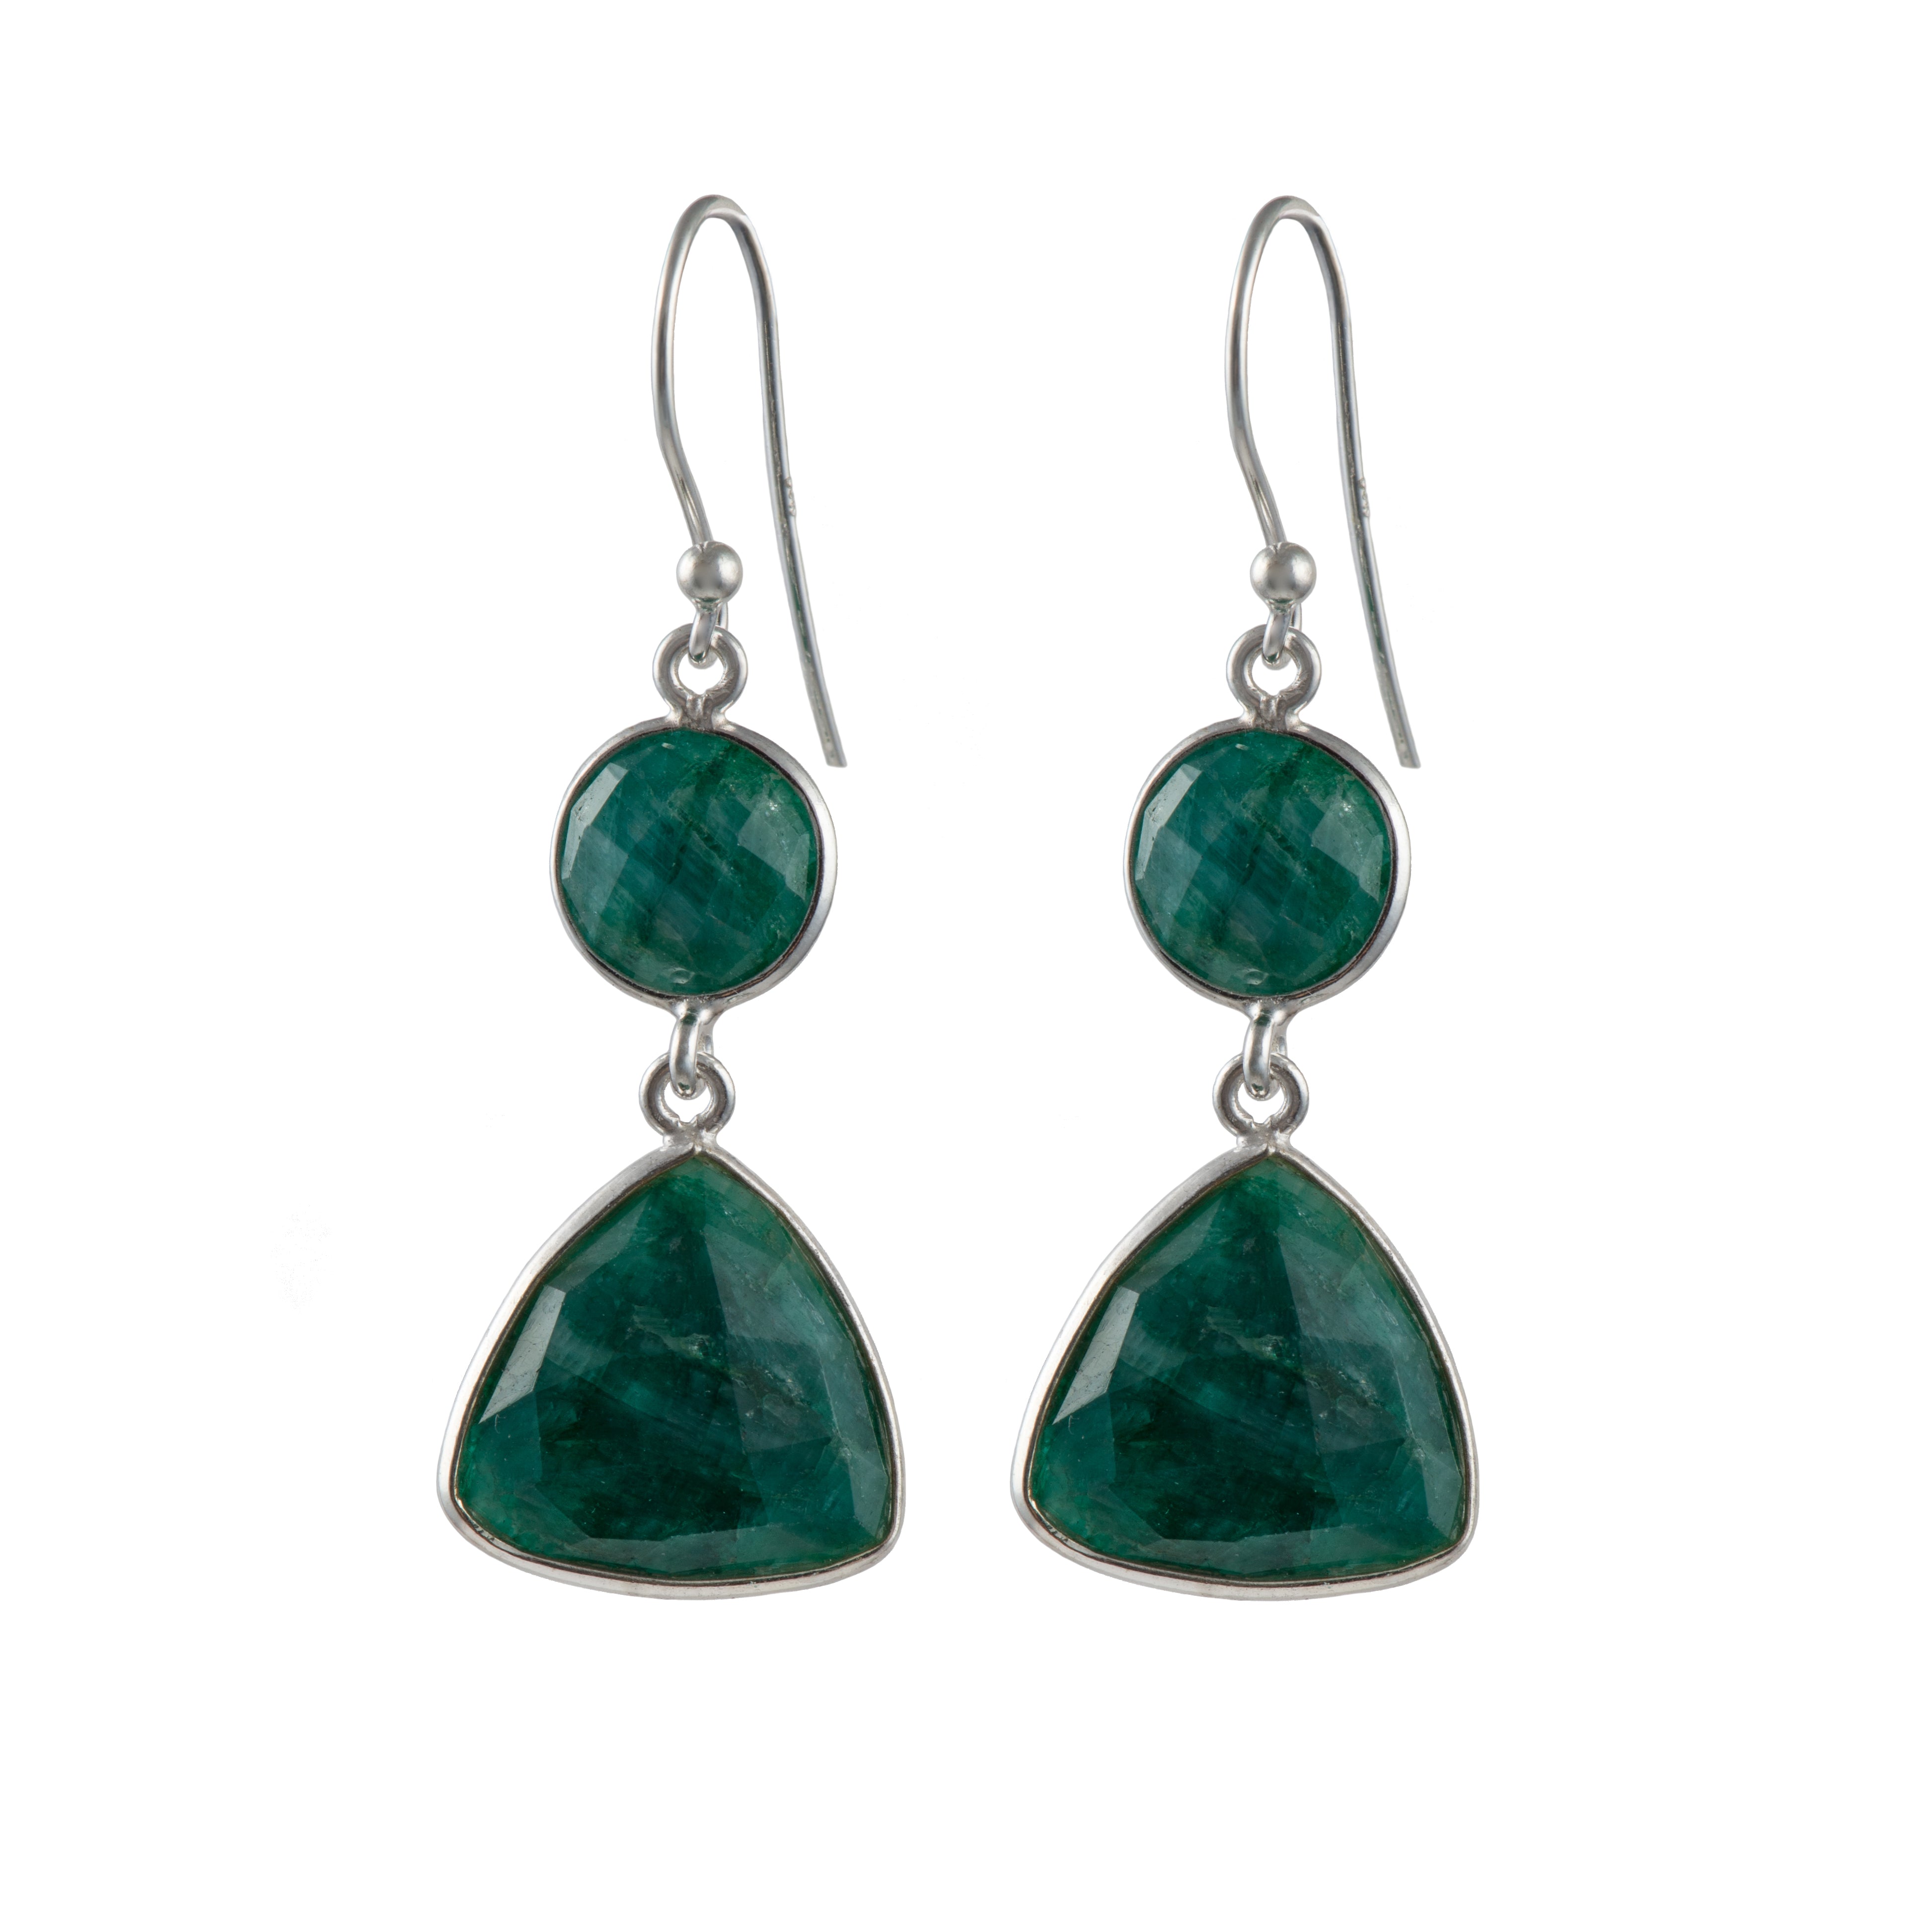 Green Sillimanite Gemstone Earrings in Sterling Silver - Triangular